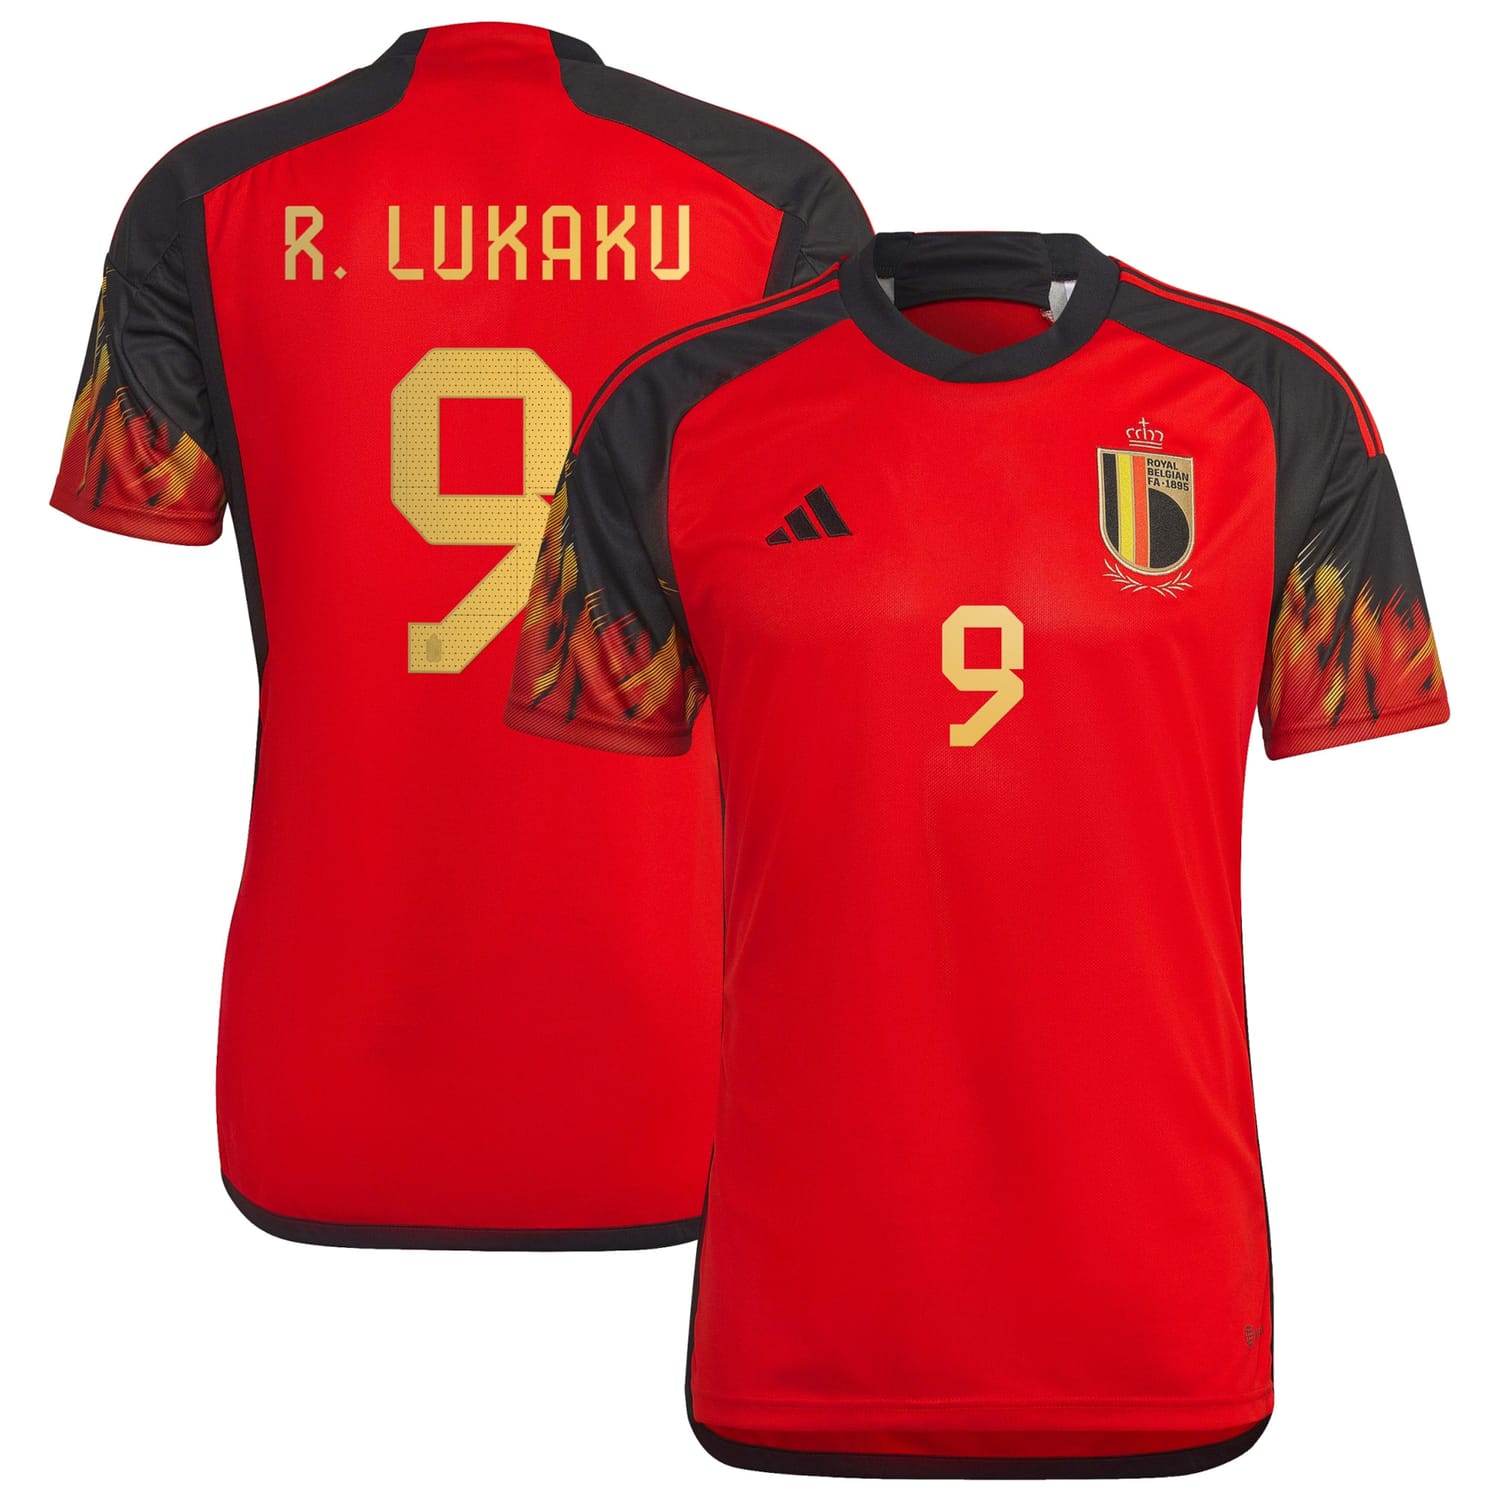 Belgium National Team Home Jersey Shirt player Romelu Lukaku 9 printing for Men